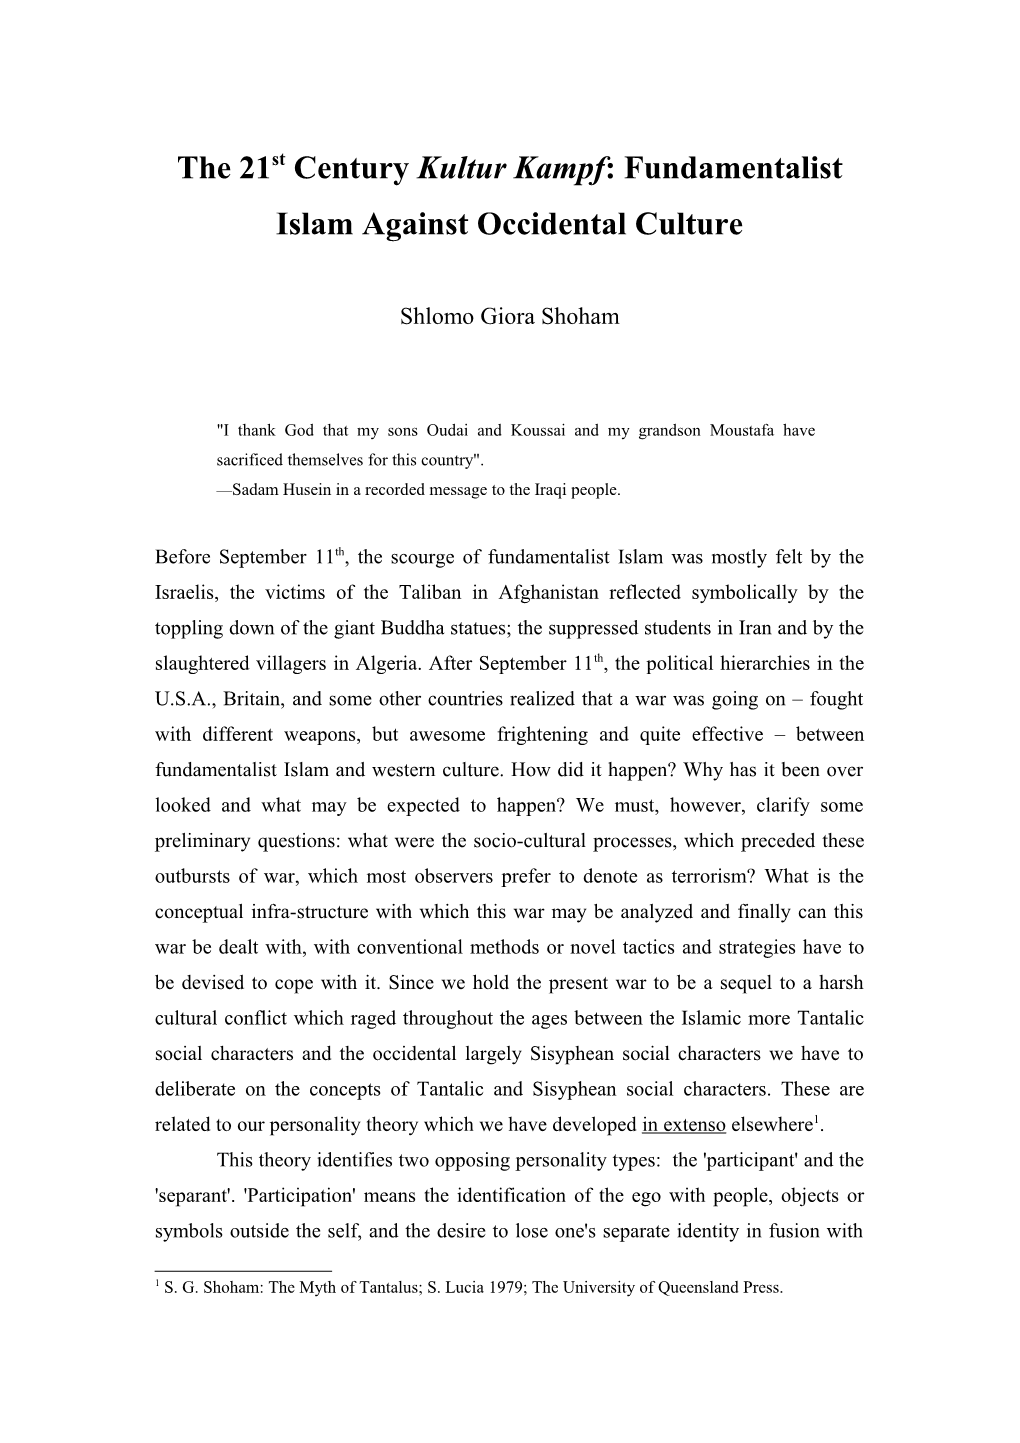 The 21St Century Kultur Kampf: Fundamentalist Islam Against Occidental Culture